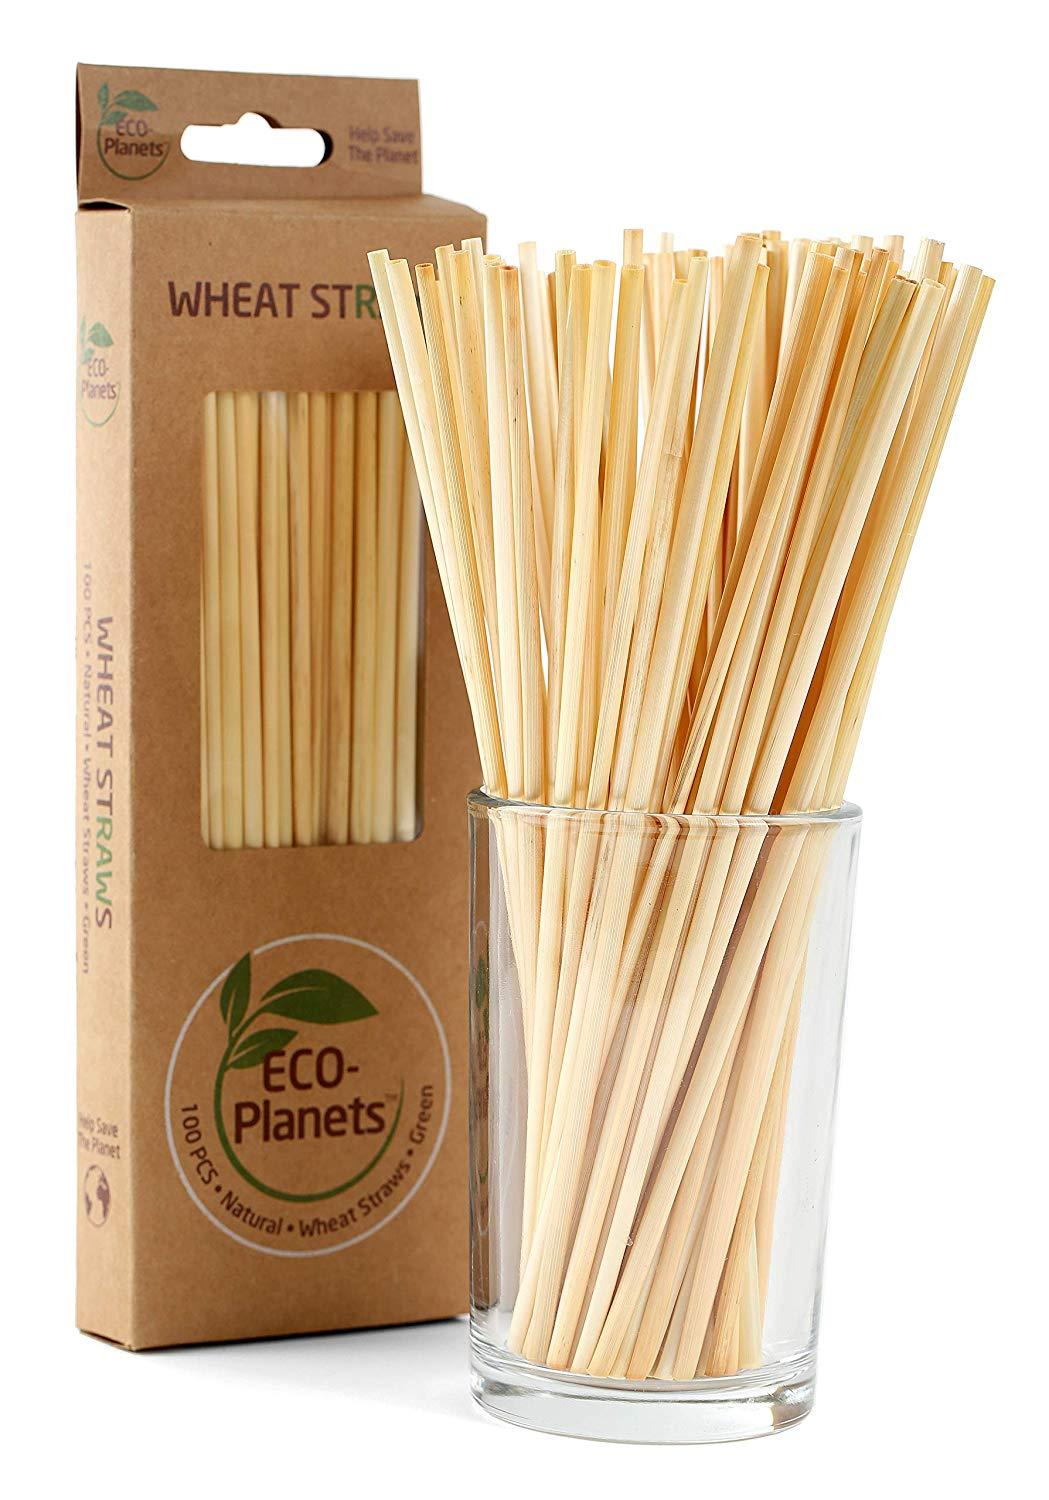 Spuntree wheat straw